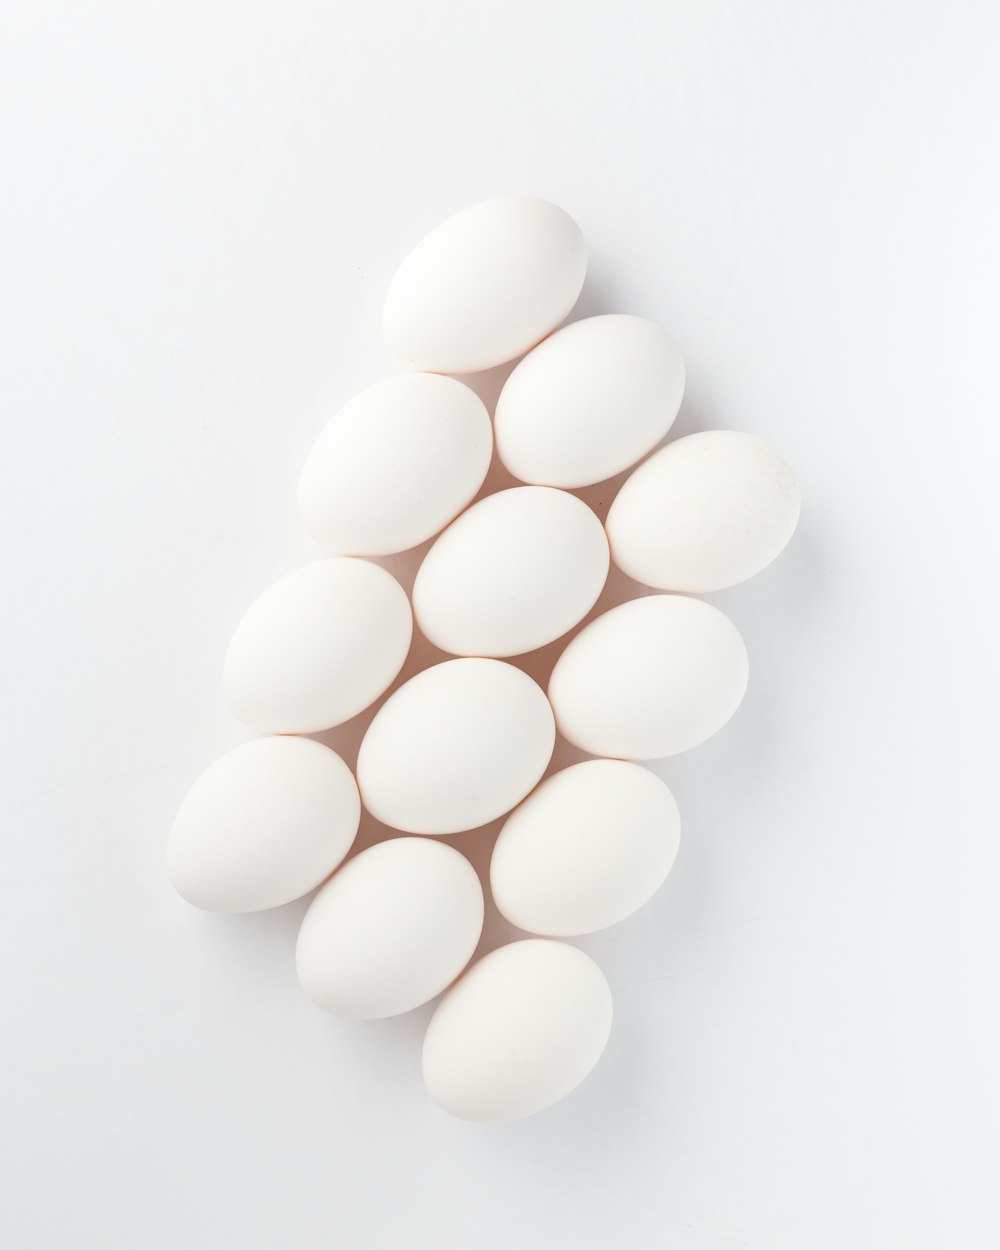 twelve white eggs on white surface